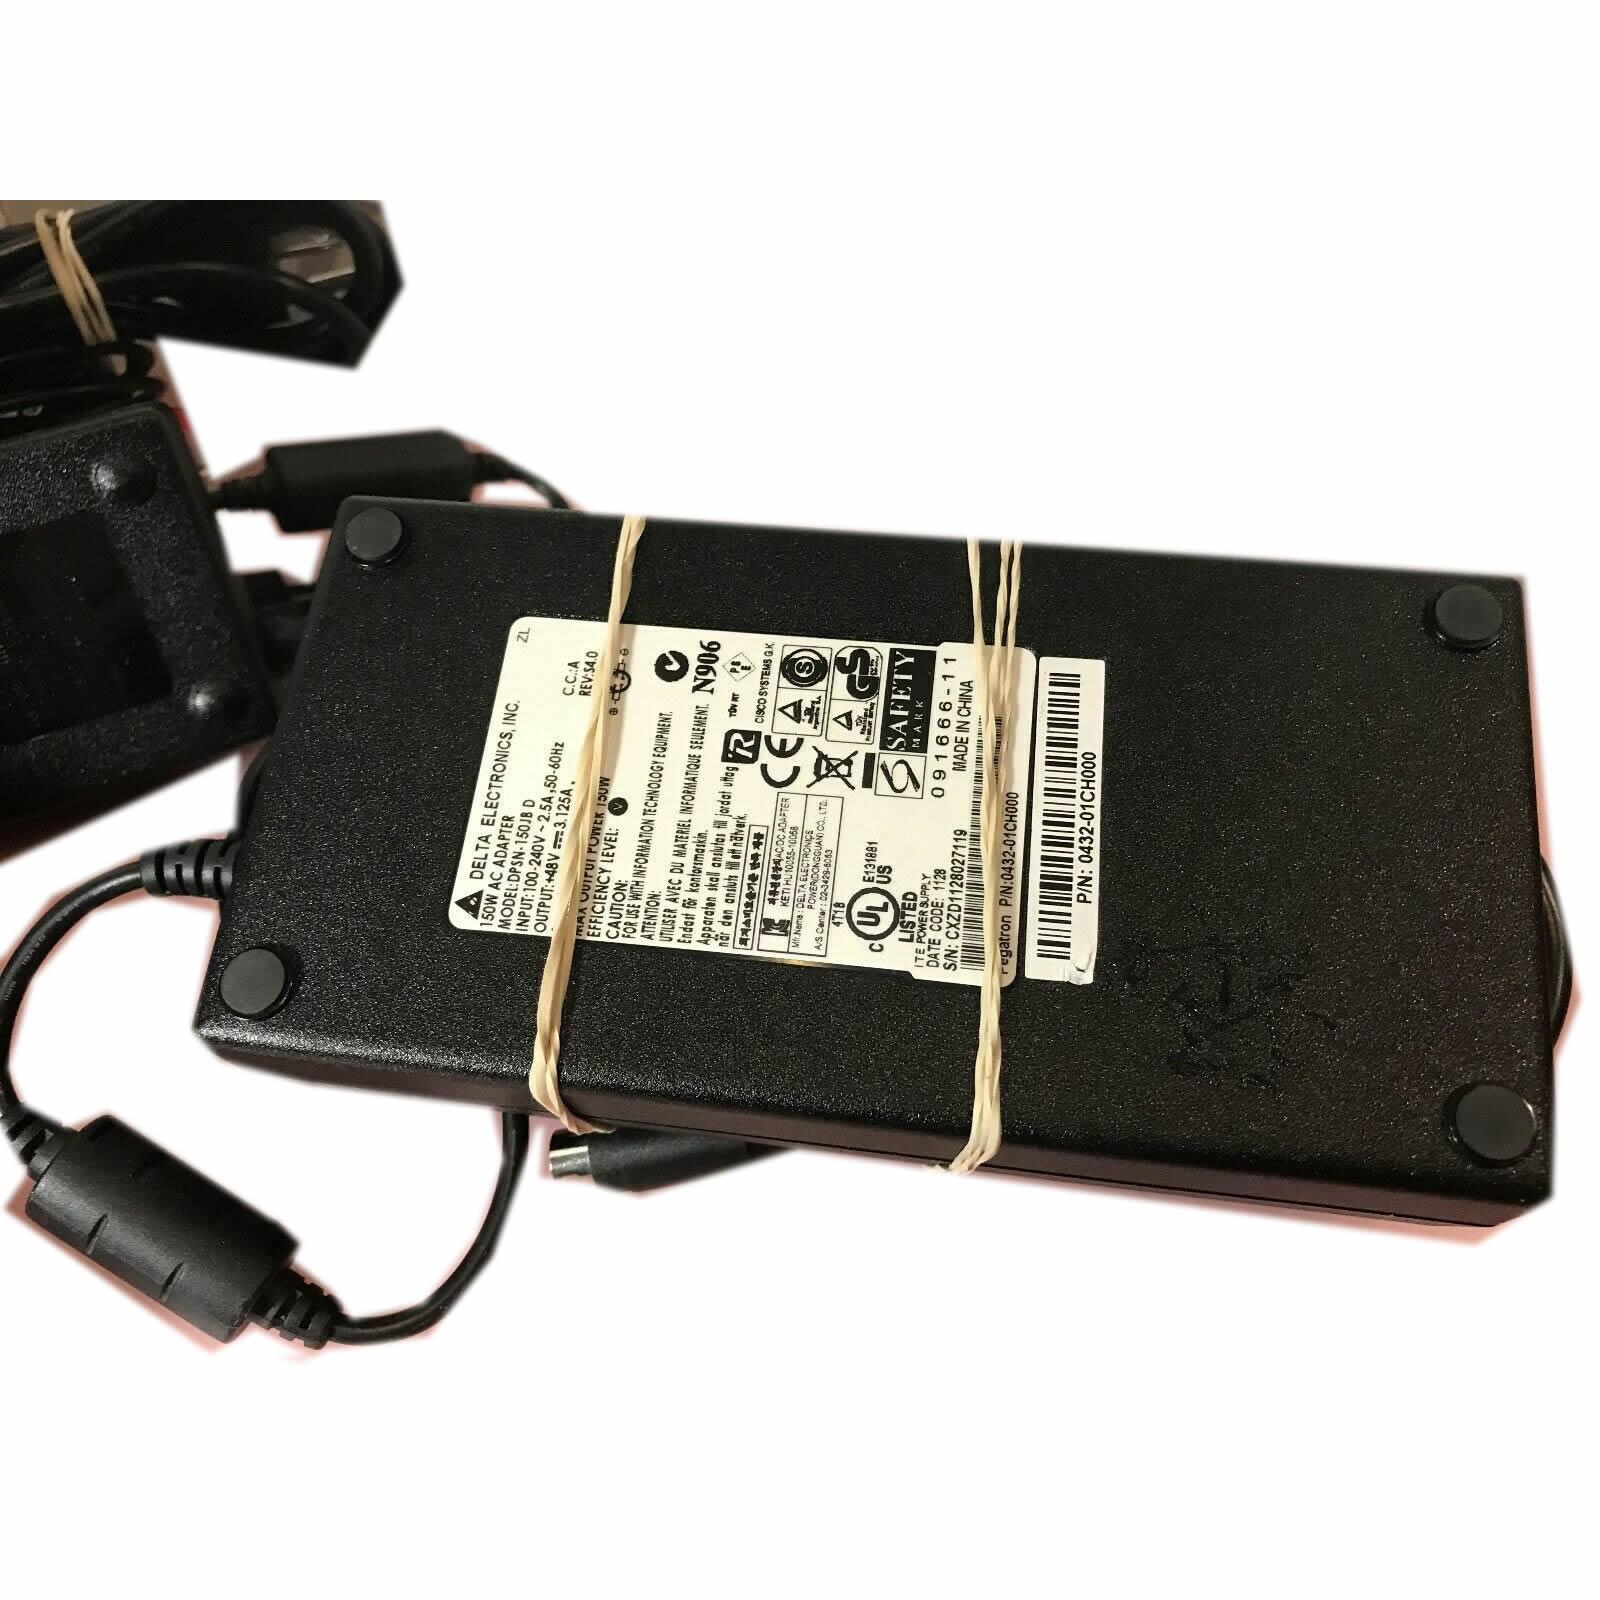 dpsn-150jb g laptop ac adapter